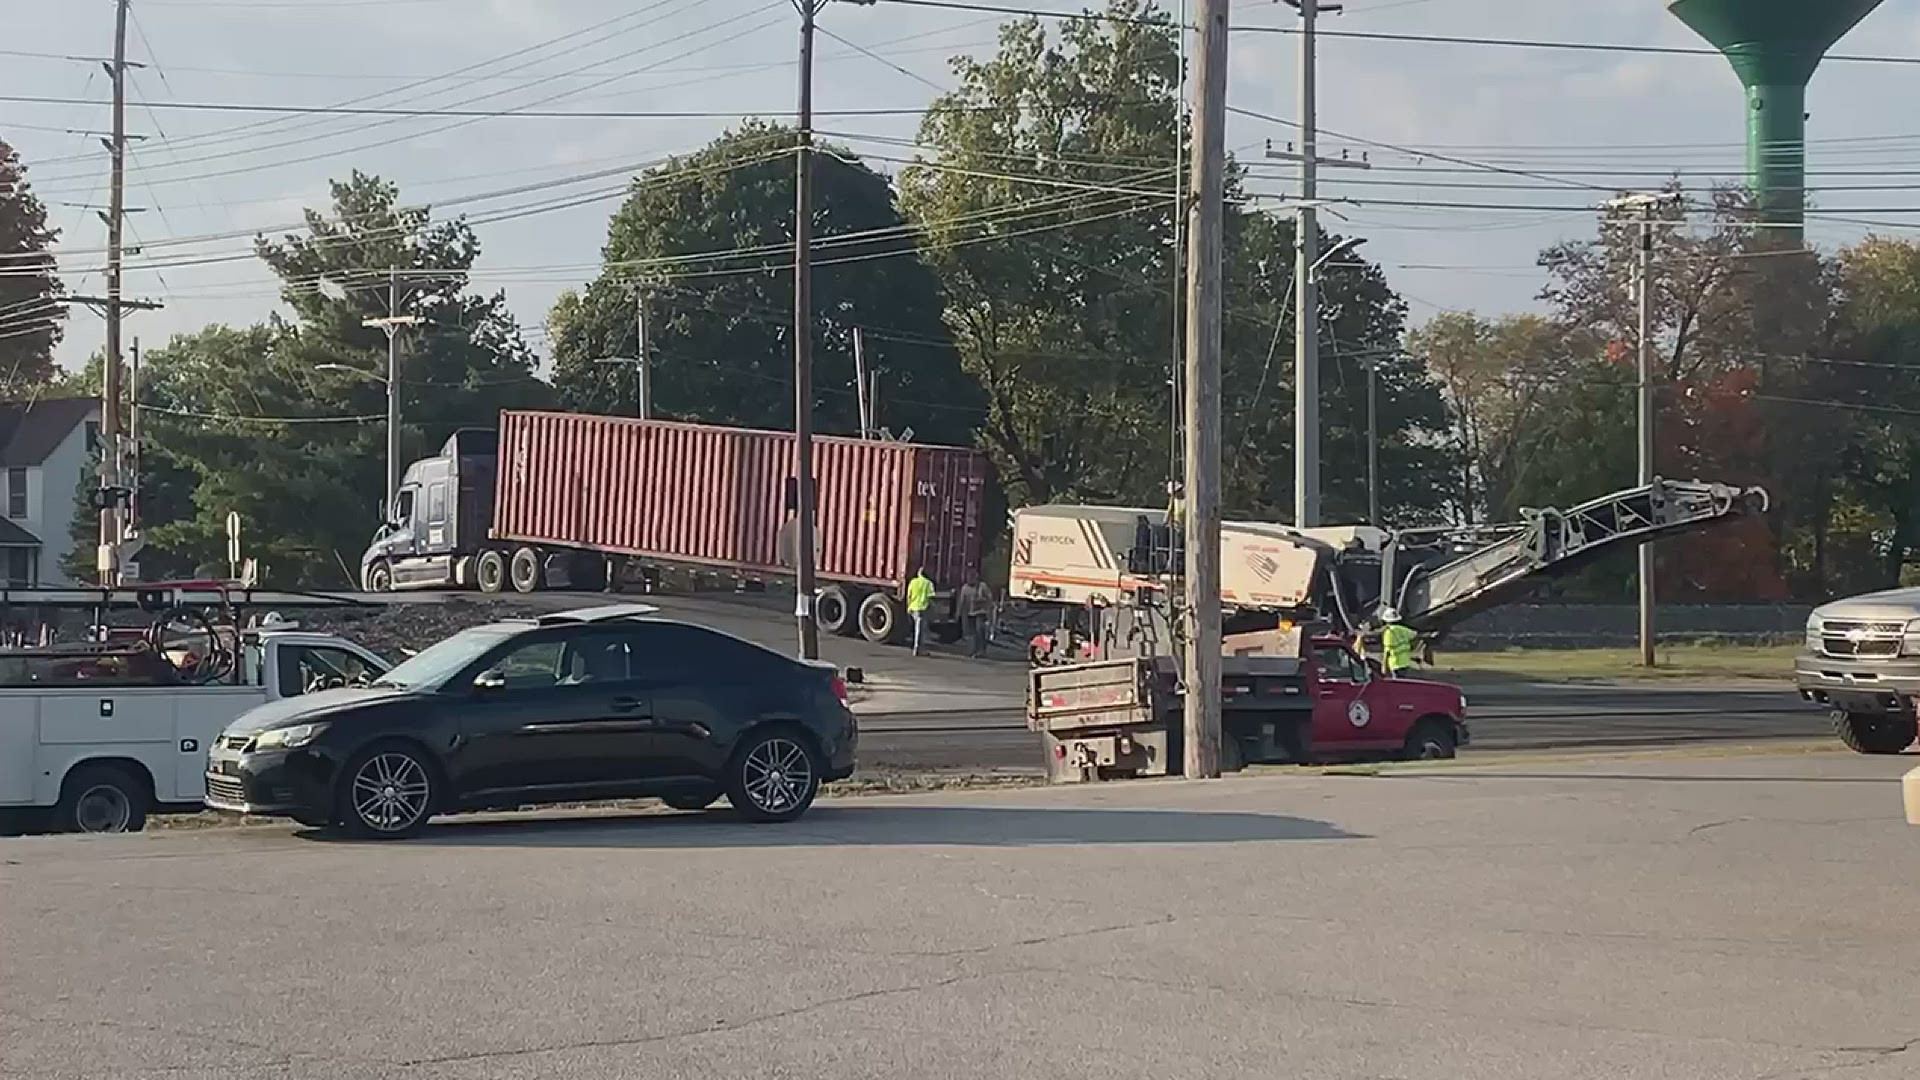 Video of a train crashing into a semi near Pendleton, Indiana on Friday, Oct. 9, 2020.

Courtesy: Shawn Gregg